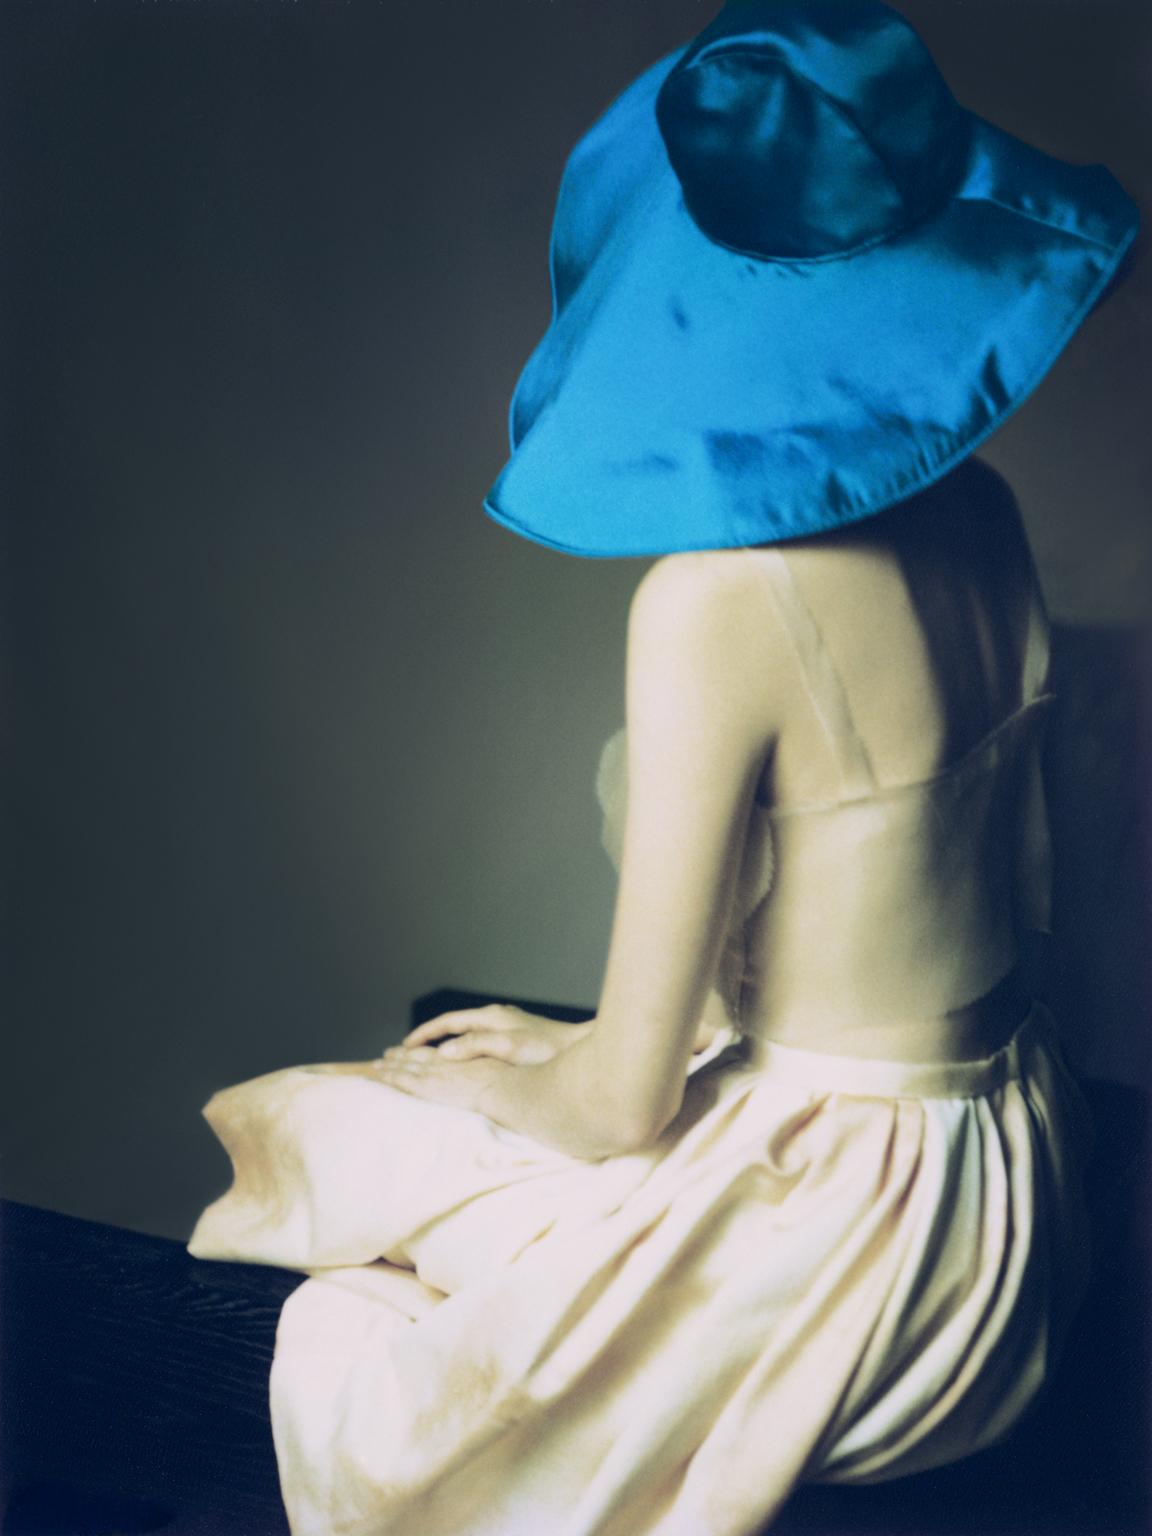 Color Photograph Erik Madigan Heck - Chapeau Bleu Le Bleu 